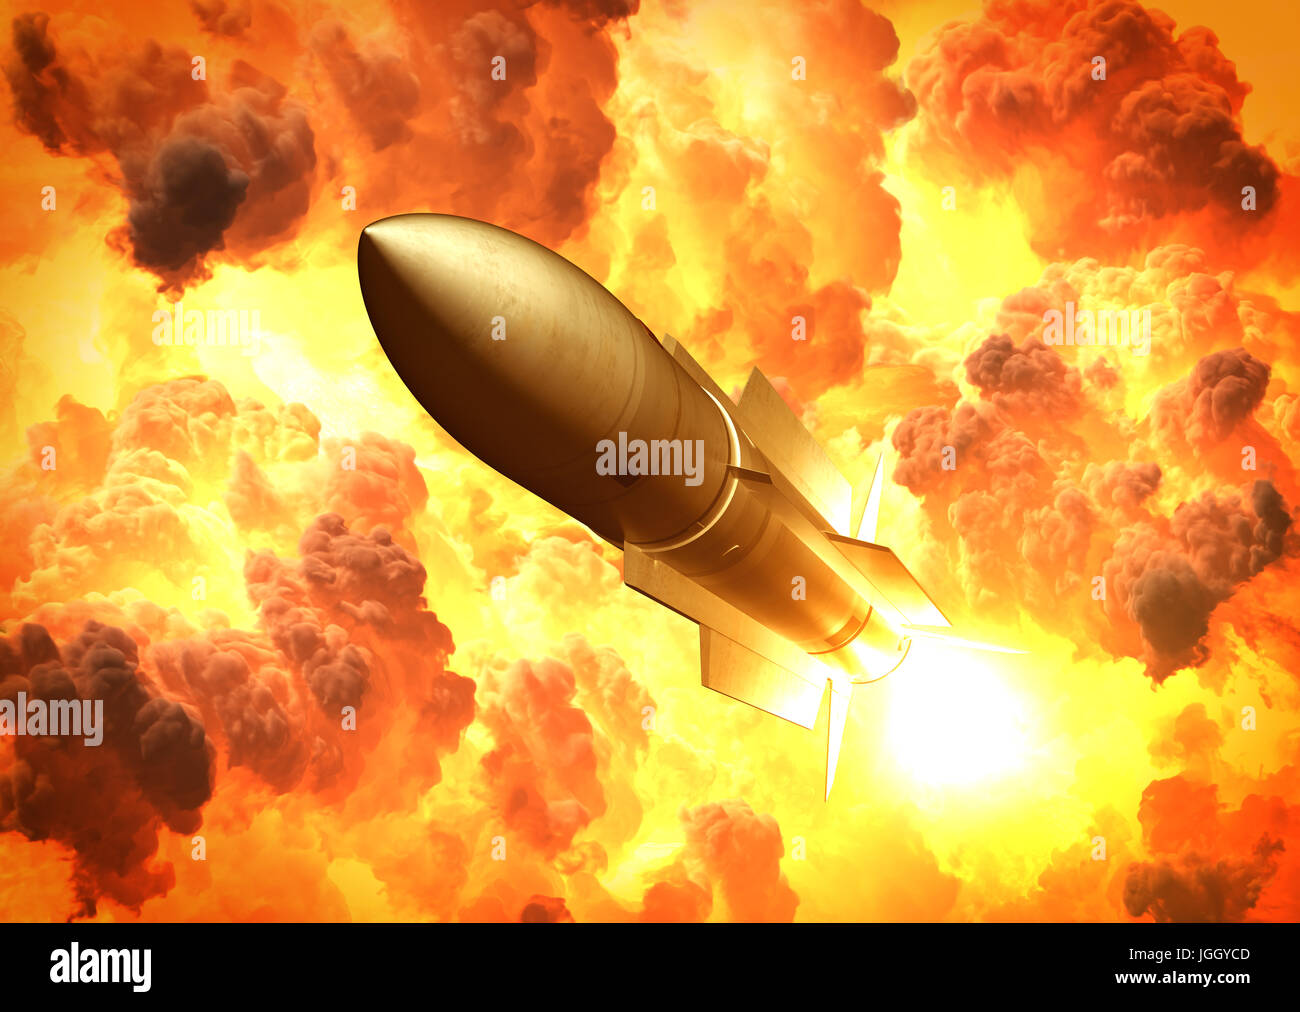 Raketenstart In den Wolken des Feuers Stockfoto